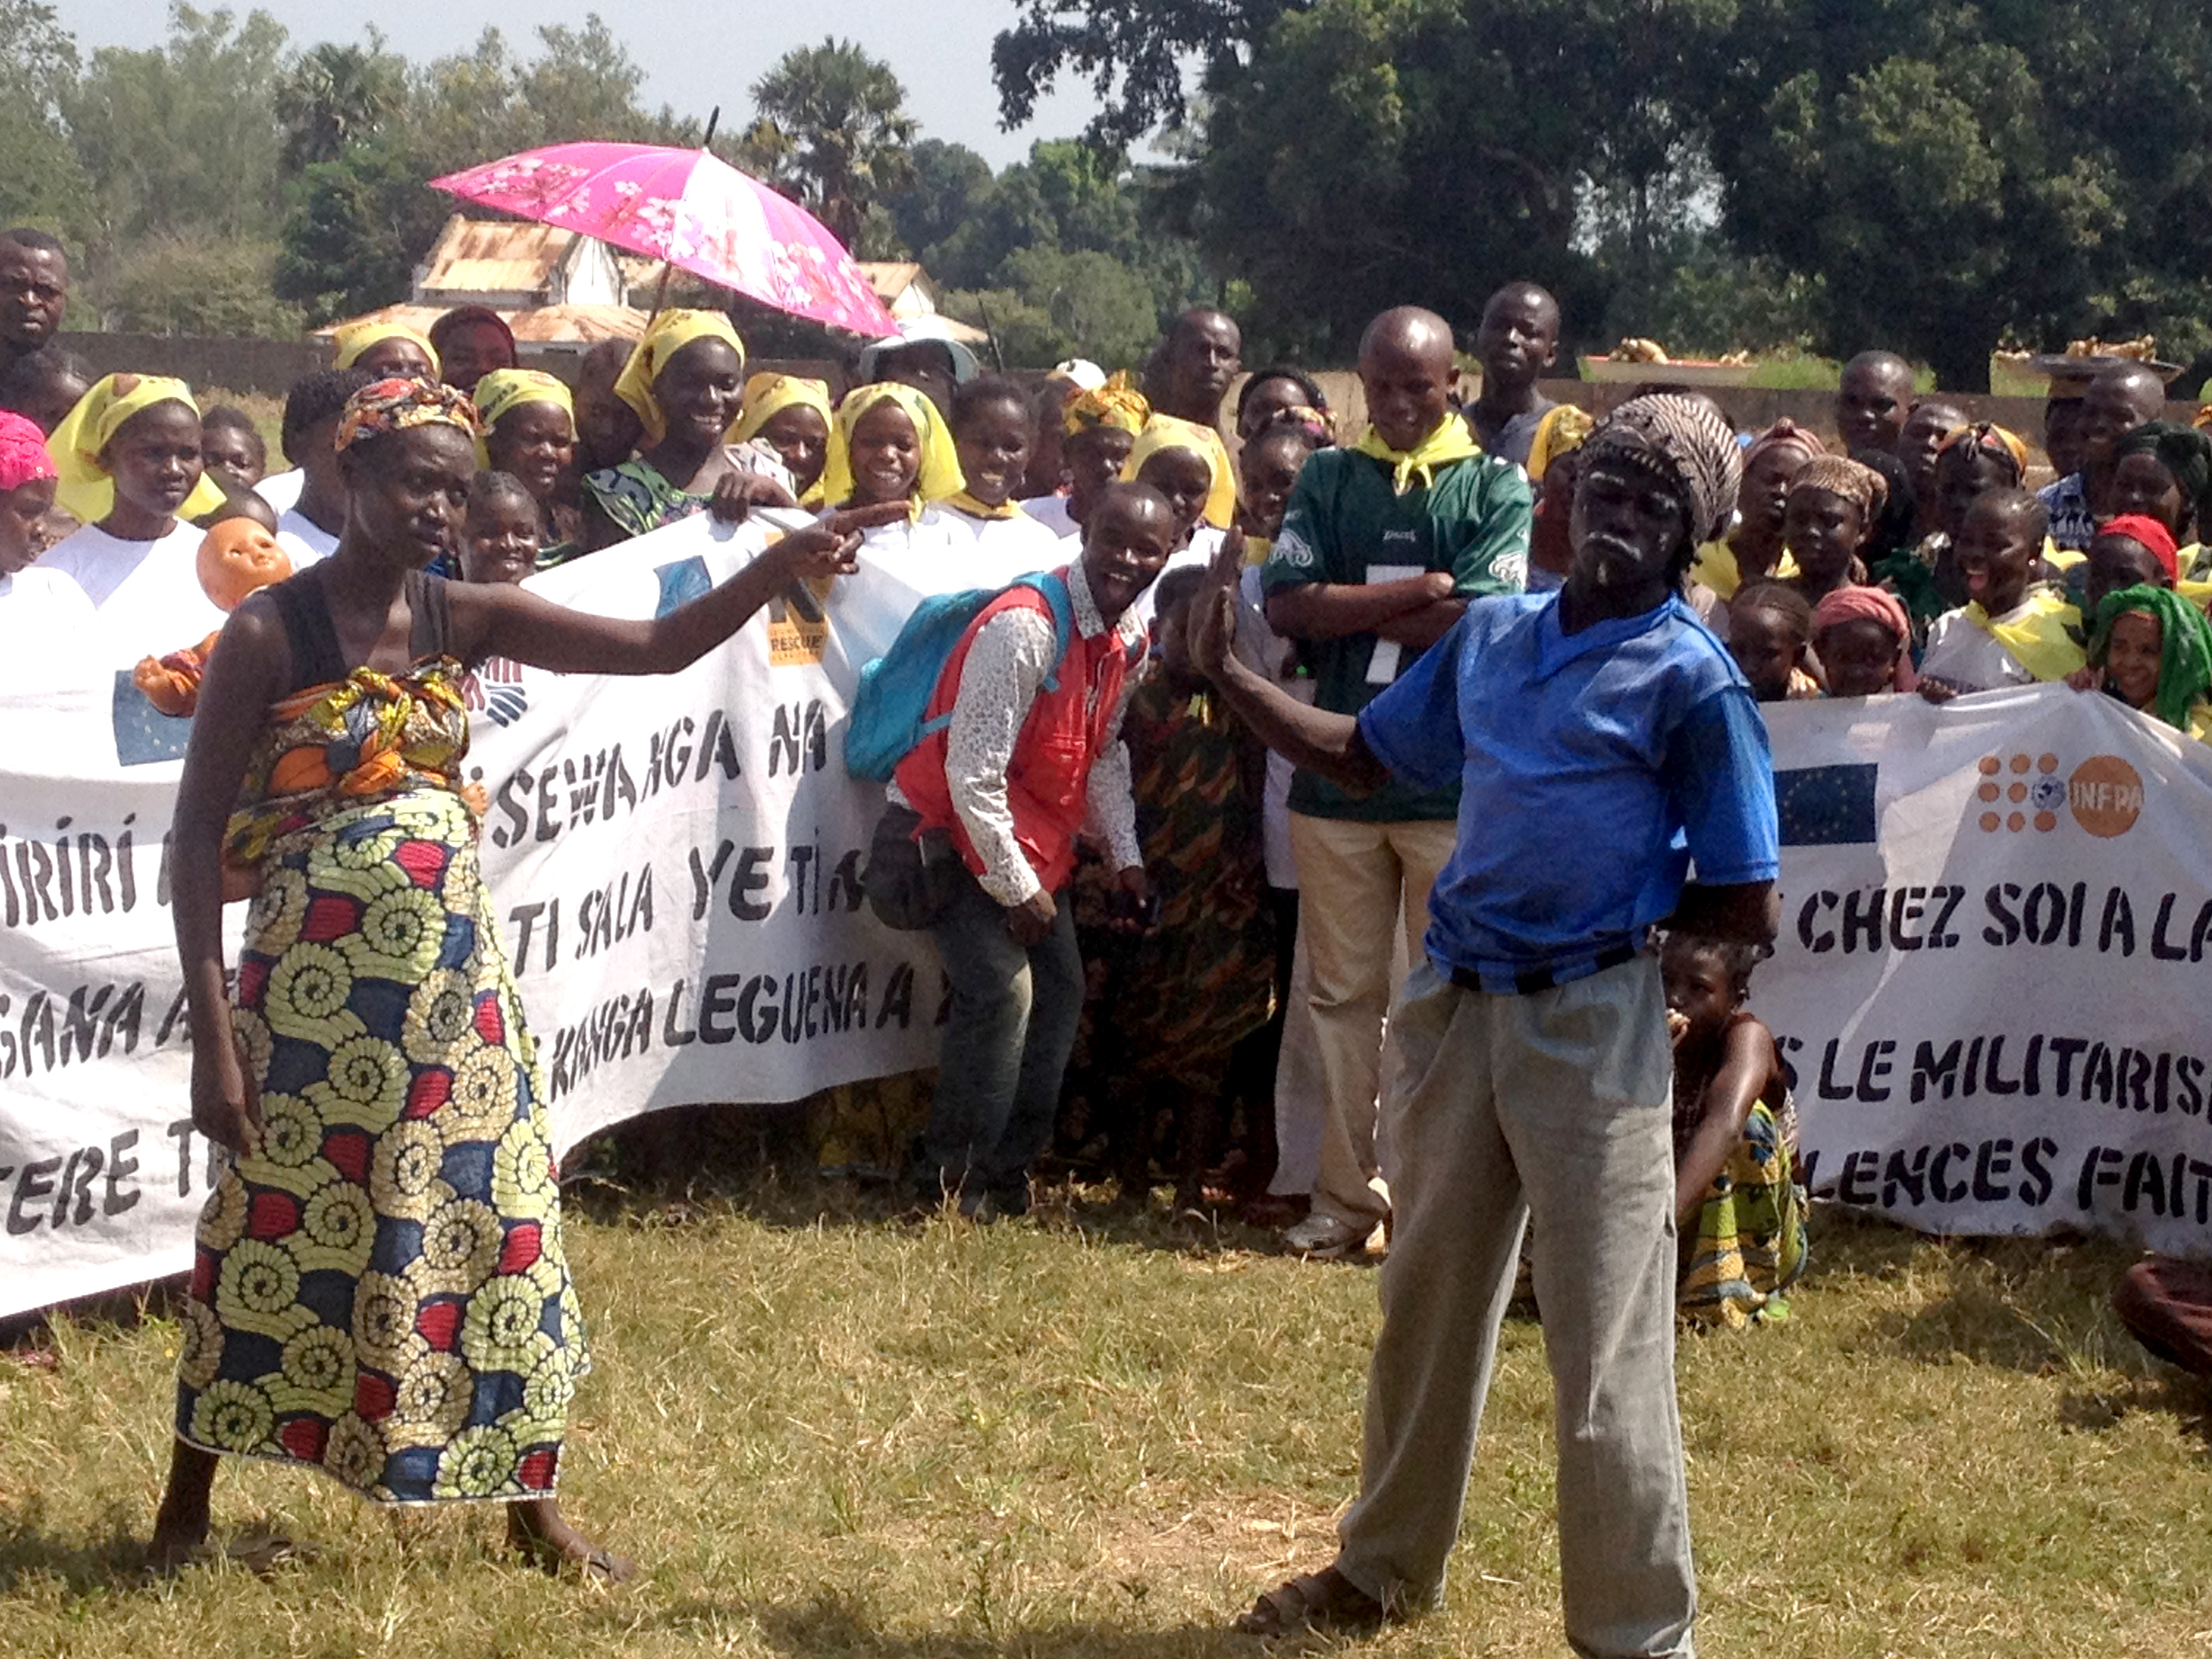 Demonstation in Central Africa Republic